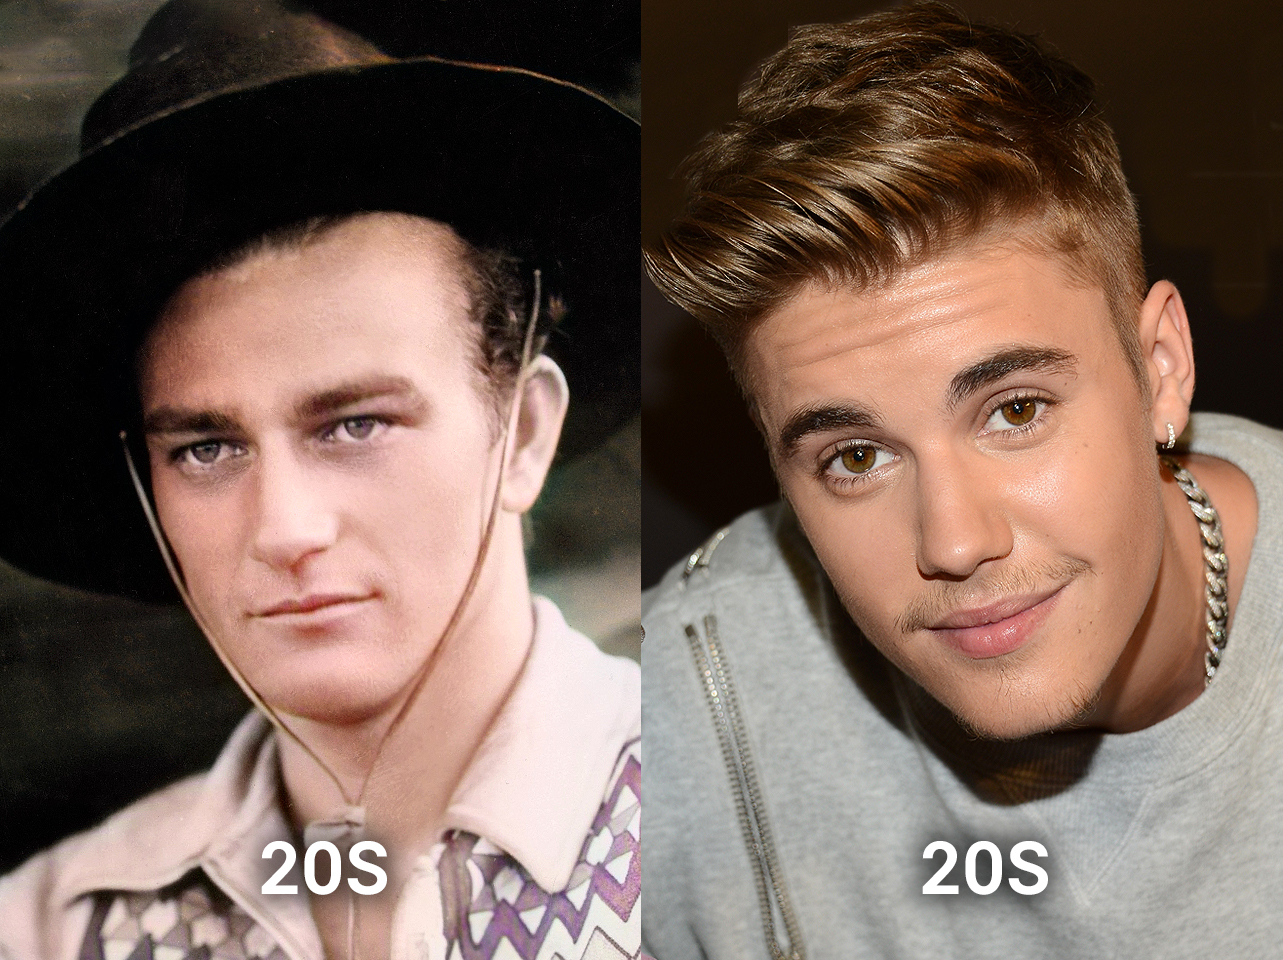 John Wayne [à gauche]. Justin Bieber [à droite] | Source : Getty Images